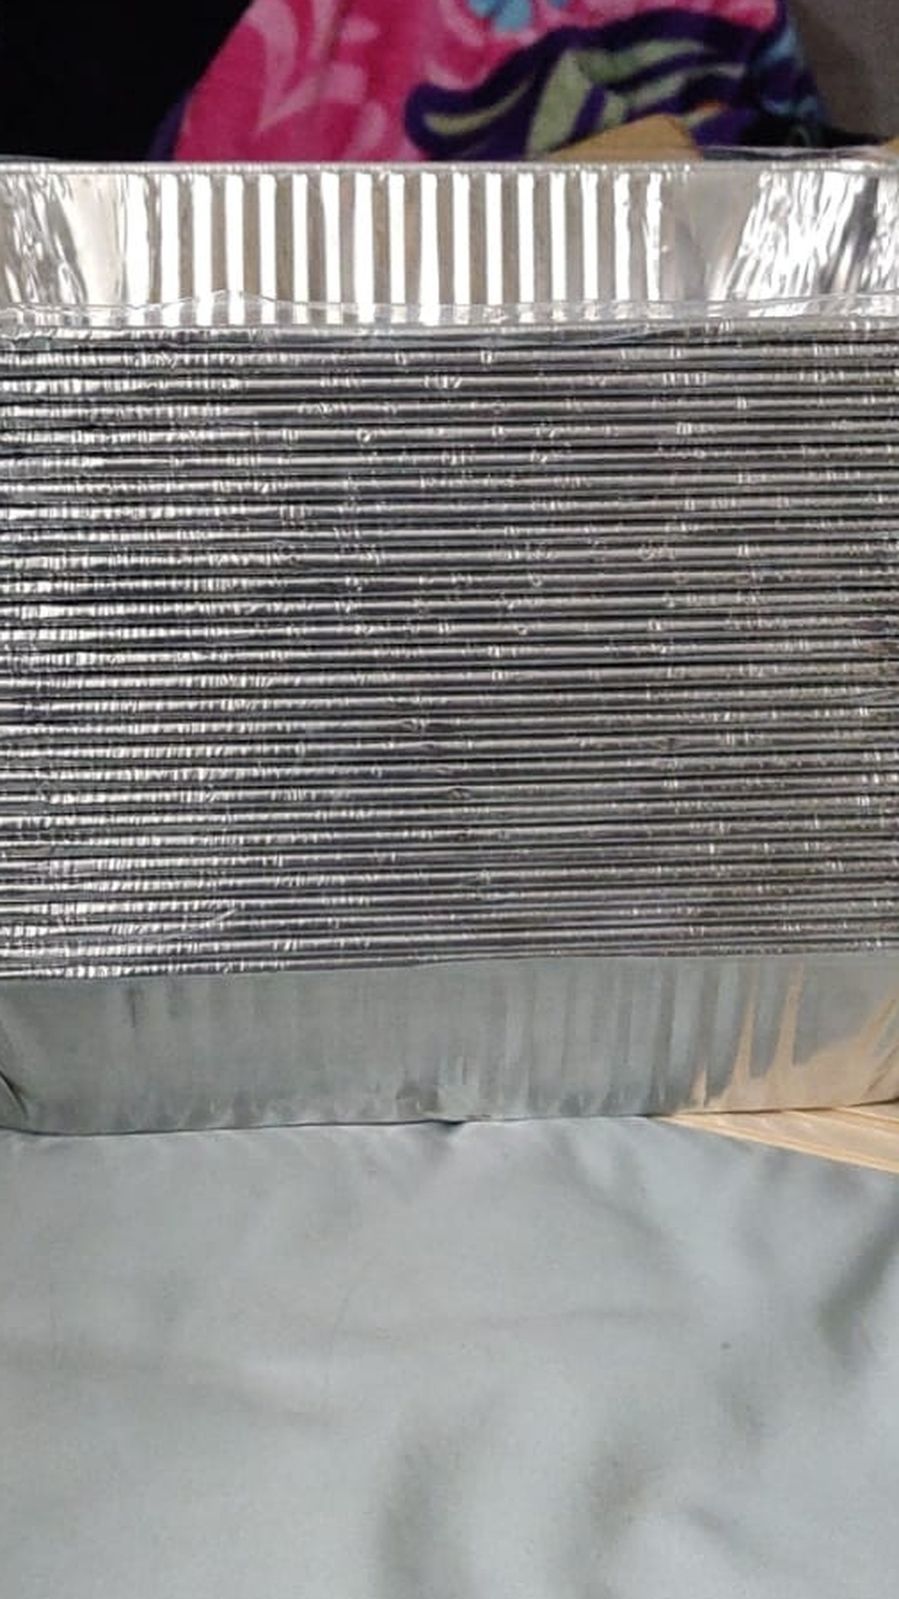 28 Half Size Aluminium Foil Tray With 7 Lids